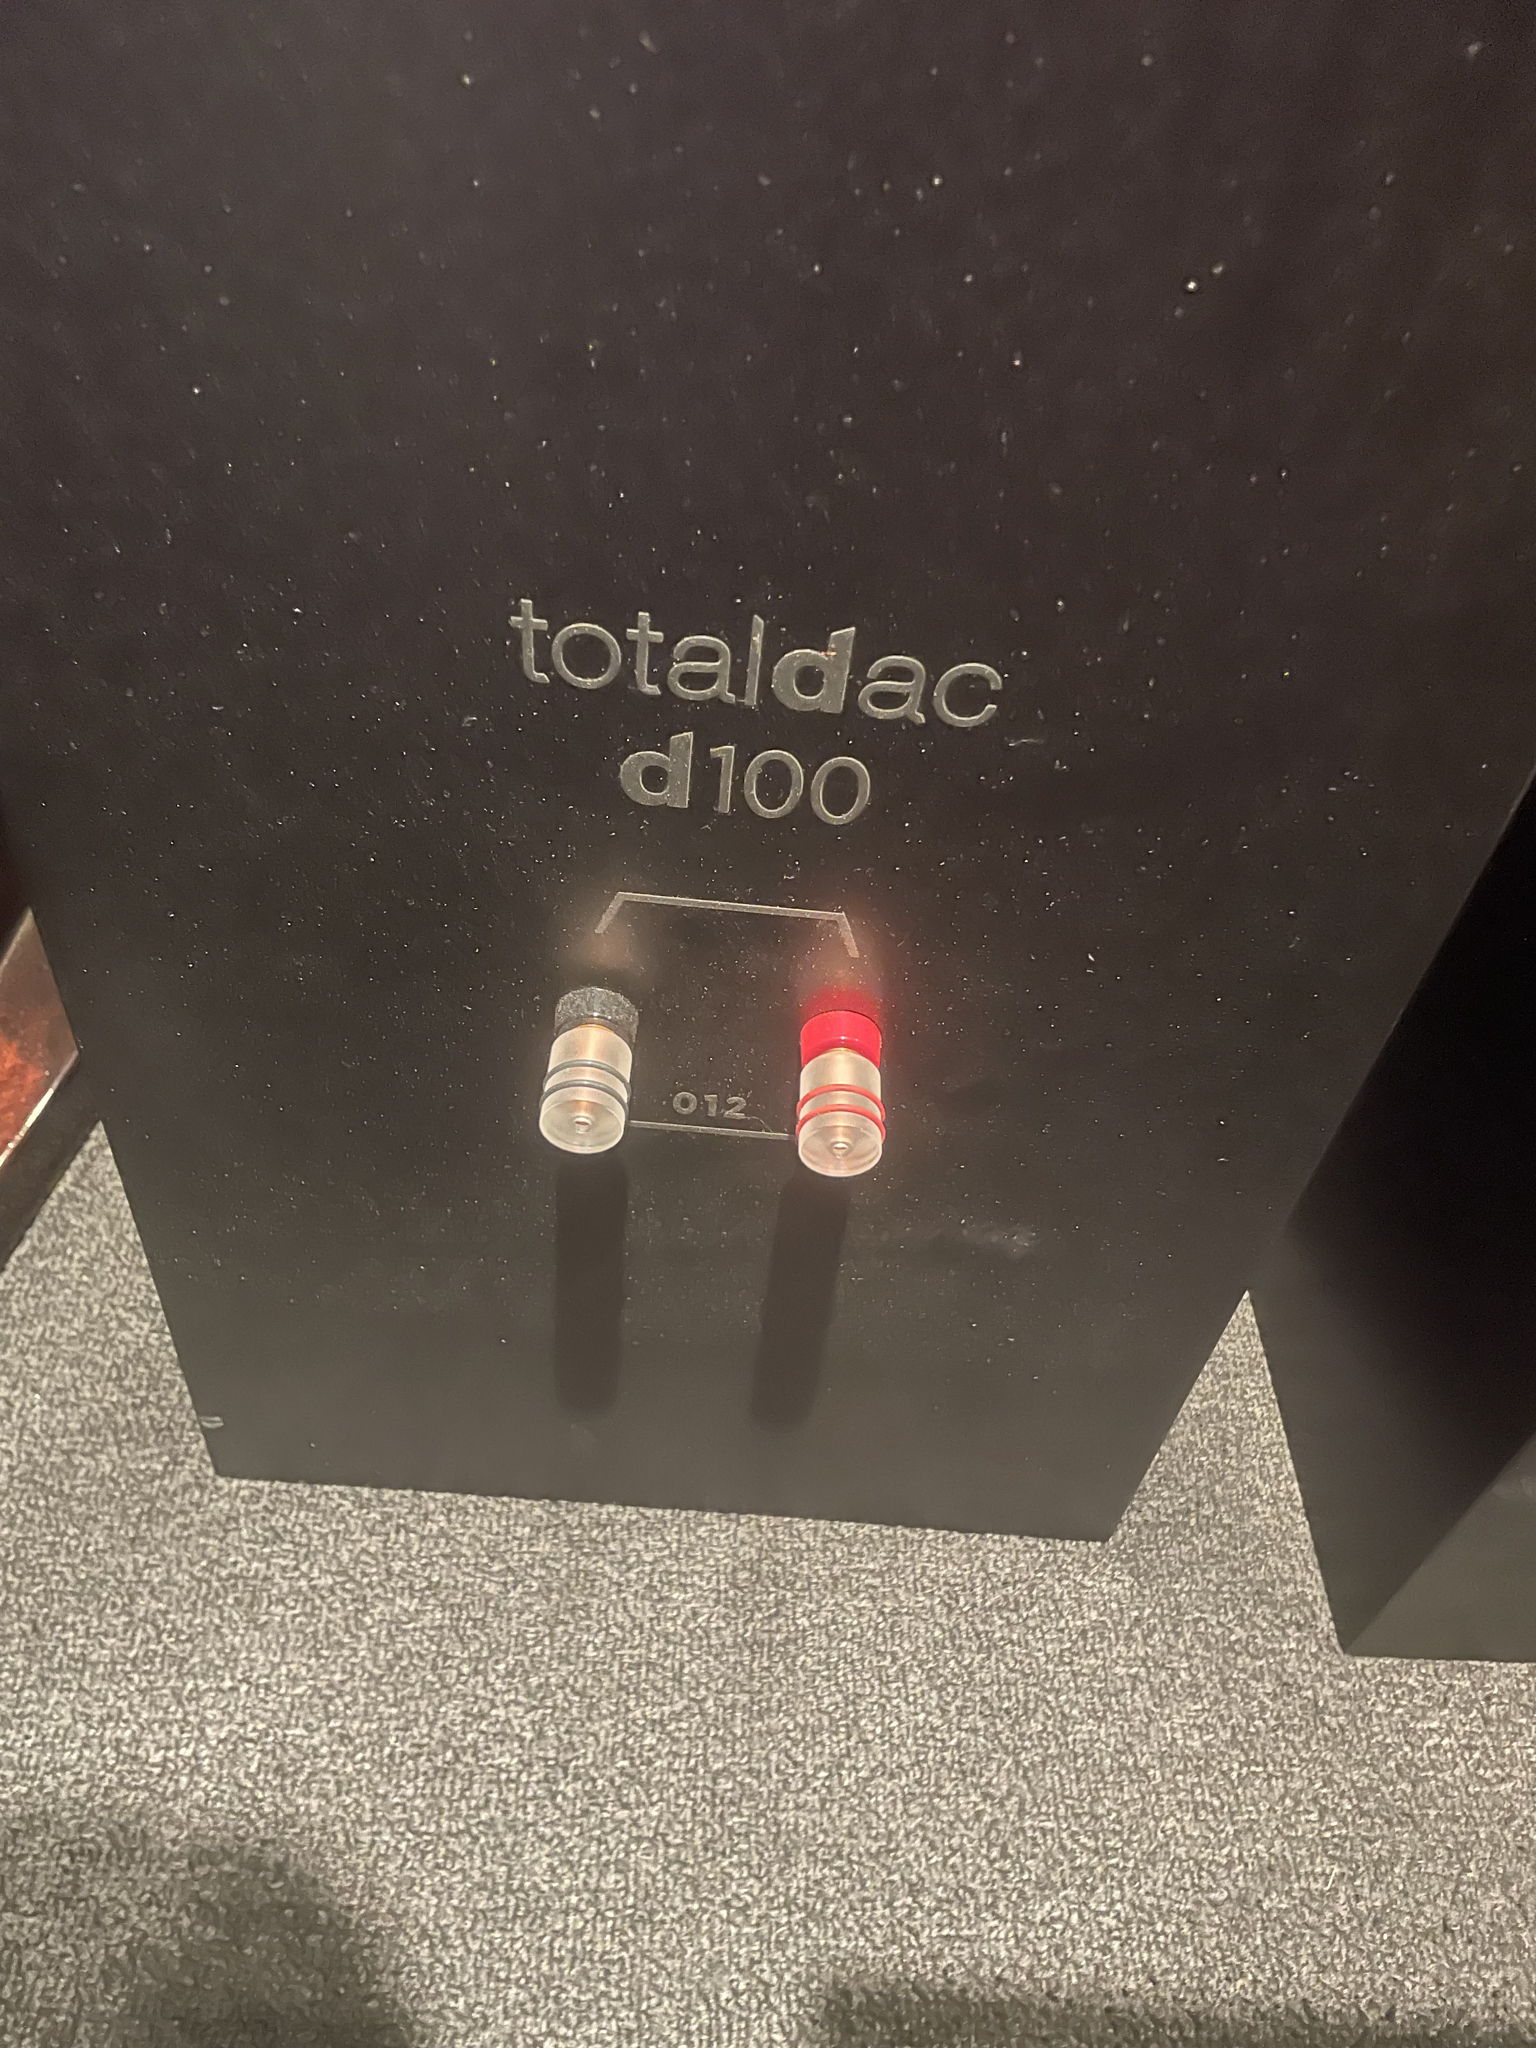 Totaldac D100 2